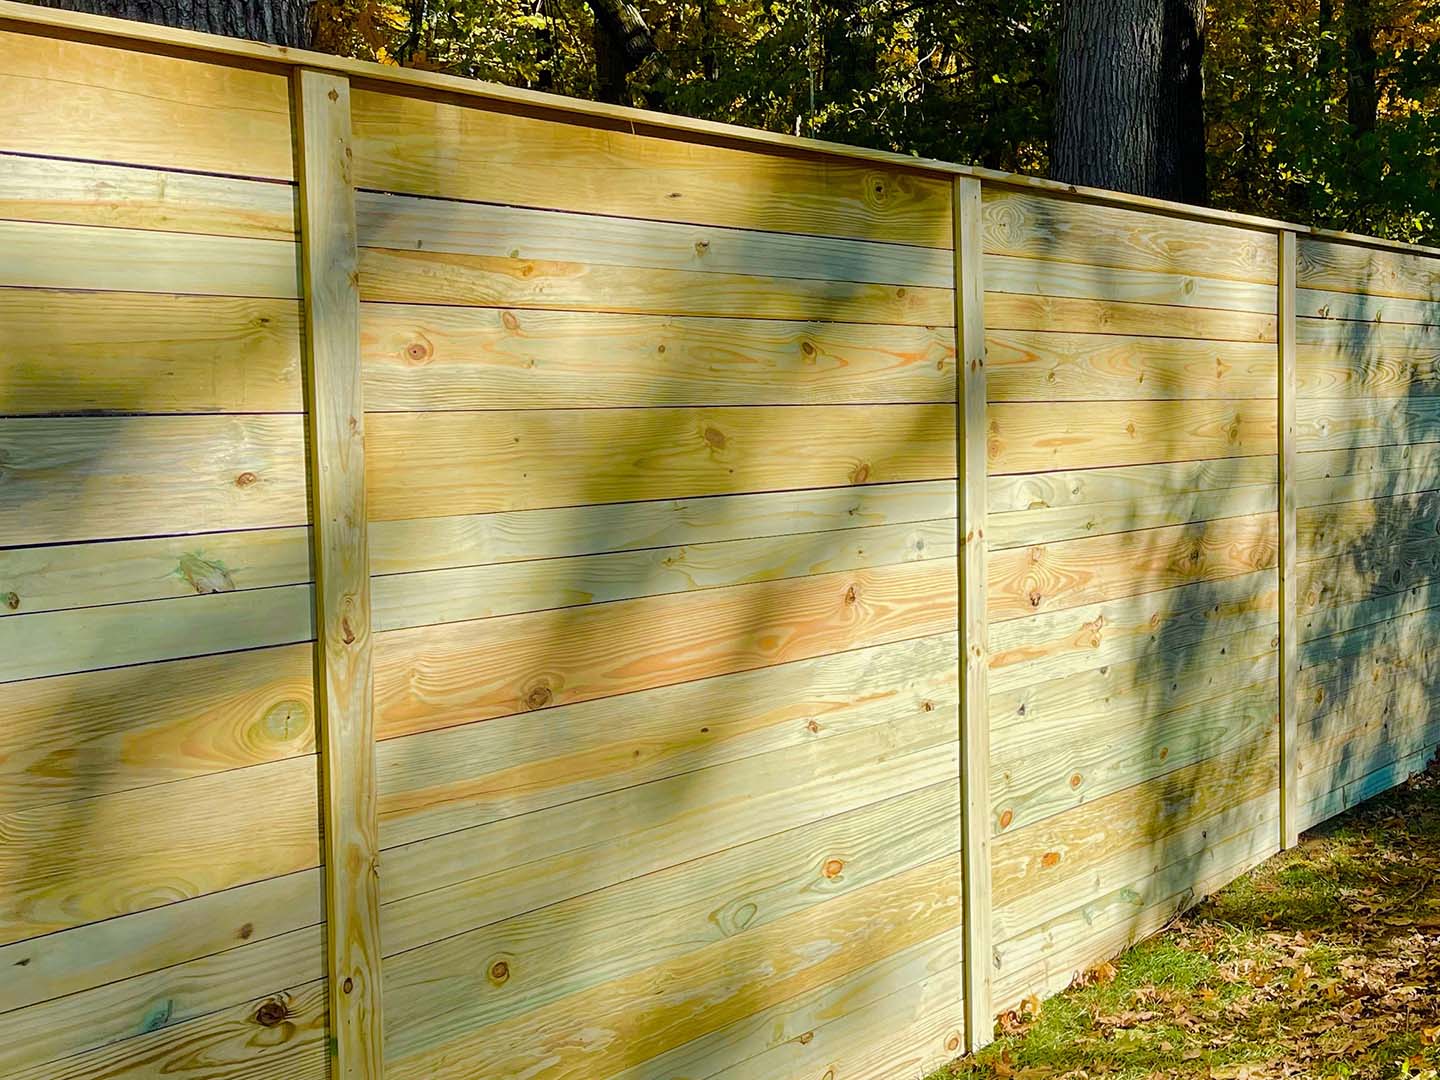 Hobart IN horizontal style wood fence